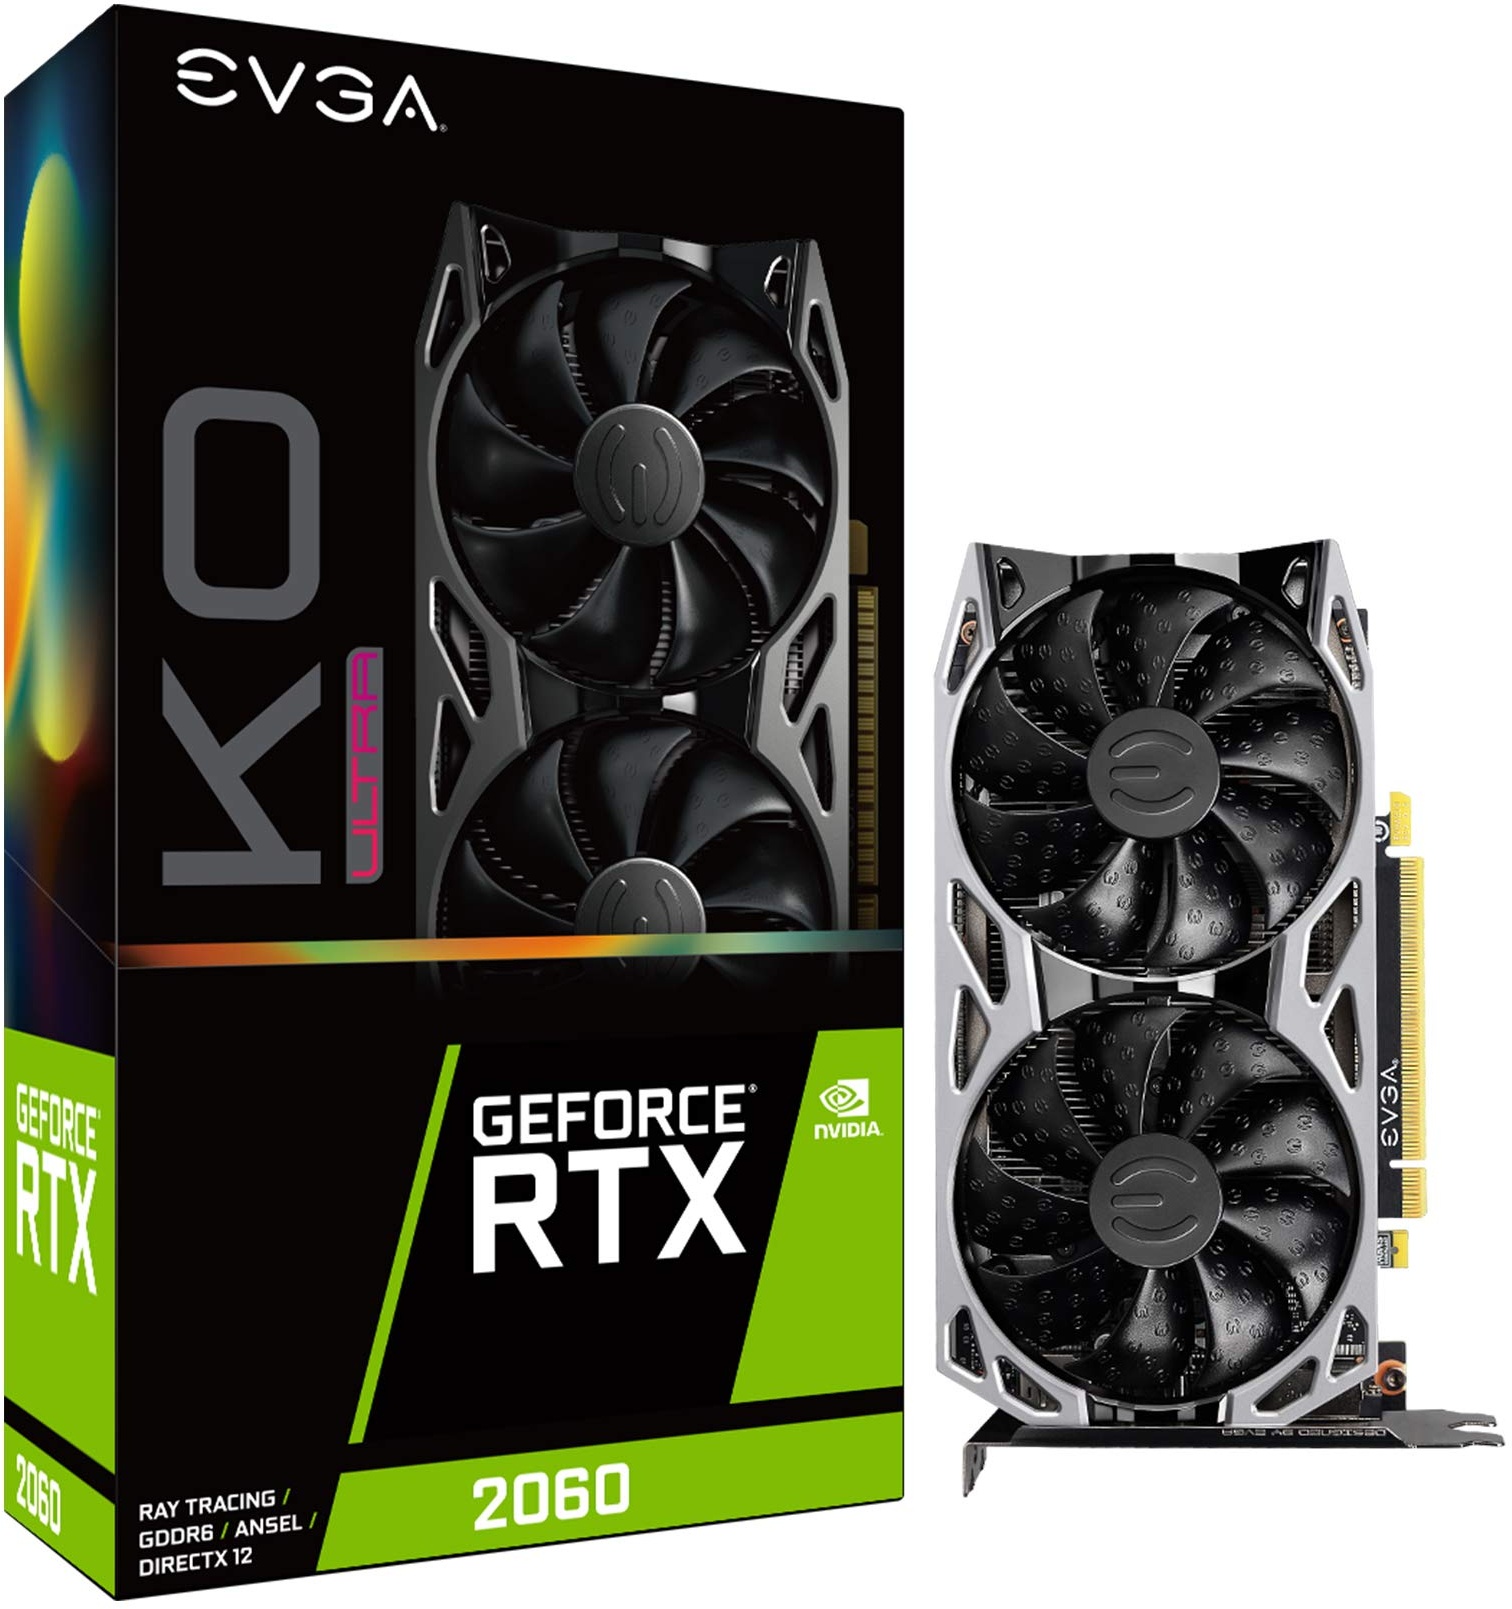 EVGA GeForce RTX 2060 KO Ultra Gaming, 6 GB GDDR6, Dual Fans, Metal Backplate, 06G-P4-2068-KR